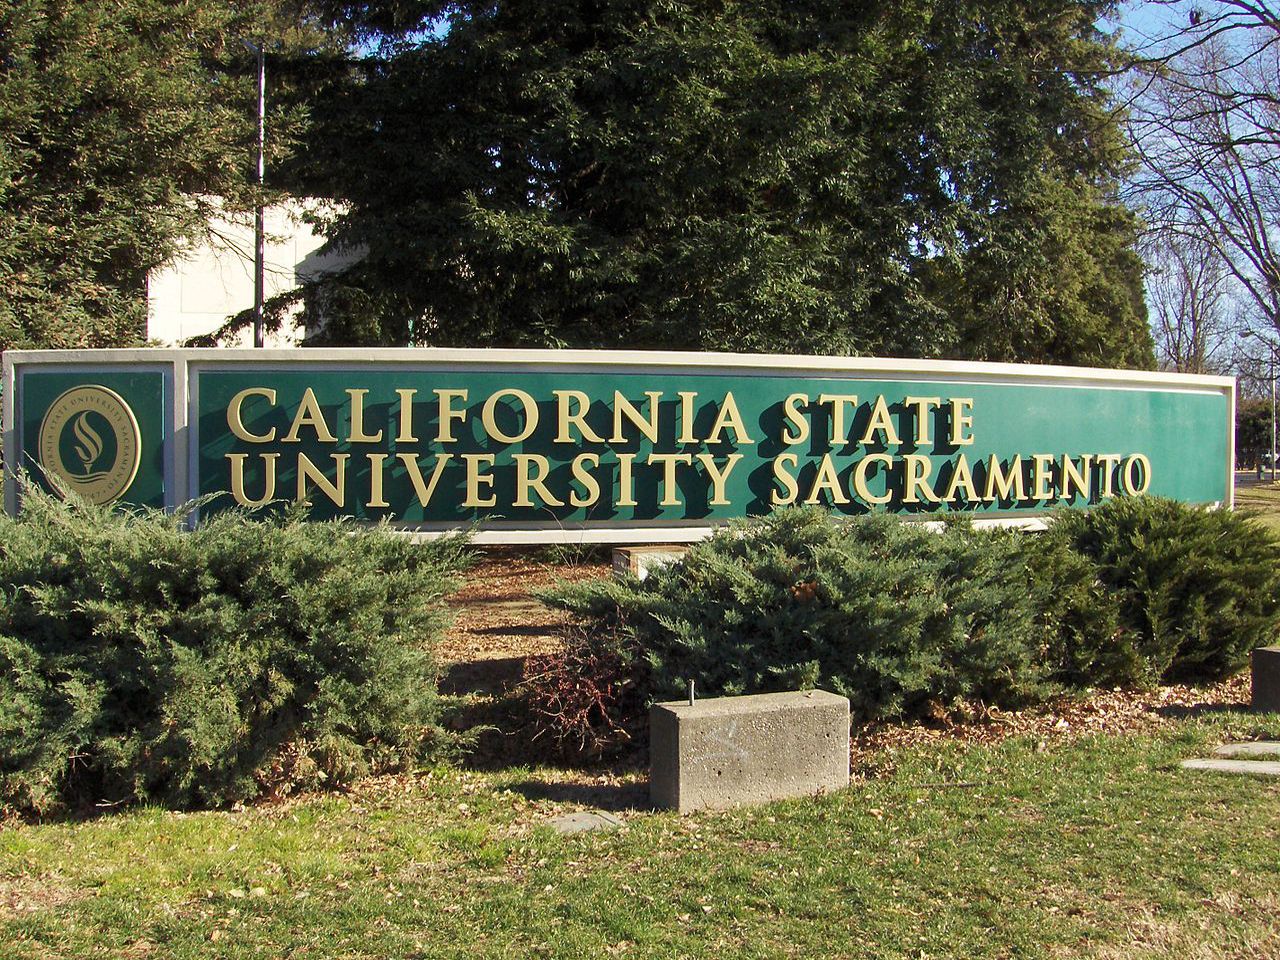 California_State_University_Sacramento_main_entrance-b41f380519c54fd38a02c509beb8c56f